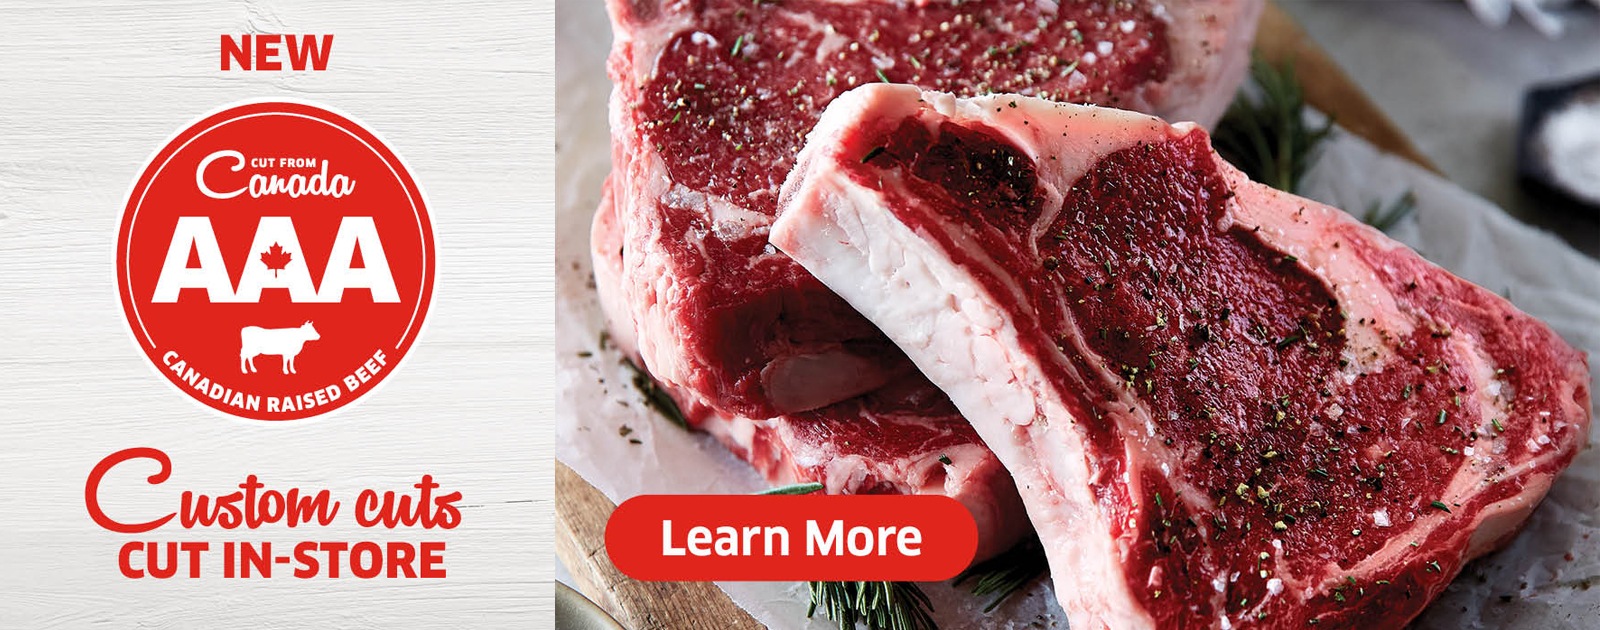 Introducing Canadian AAA Beef - Custom cuts cut in-store